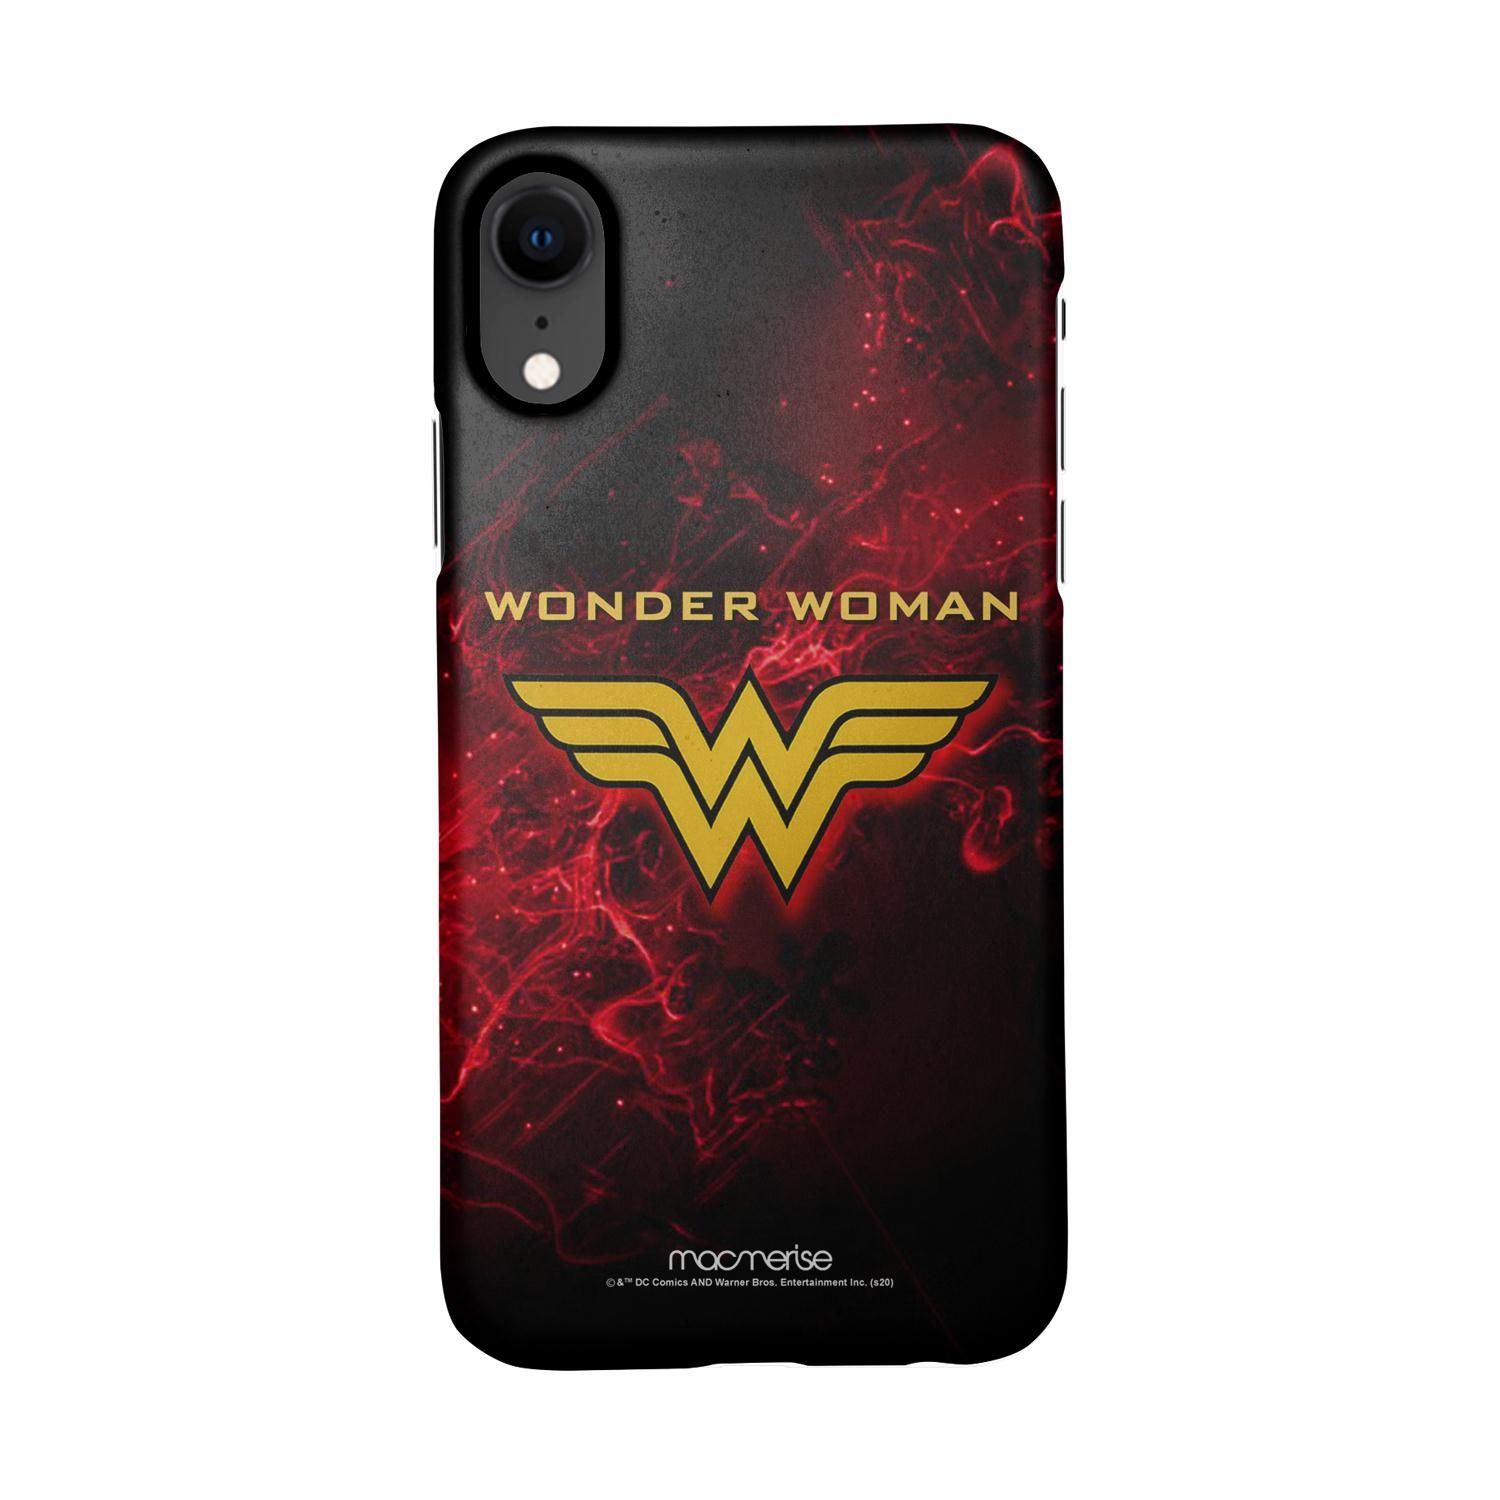 Buy Emblem Wonder Woman - Sleek Phone Case for iPhone XR Online